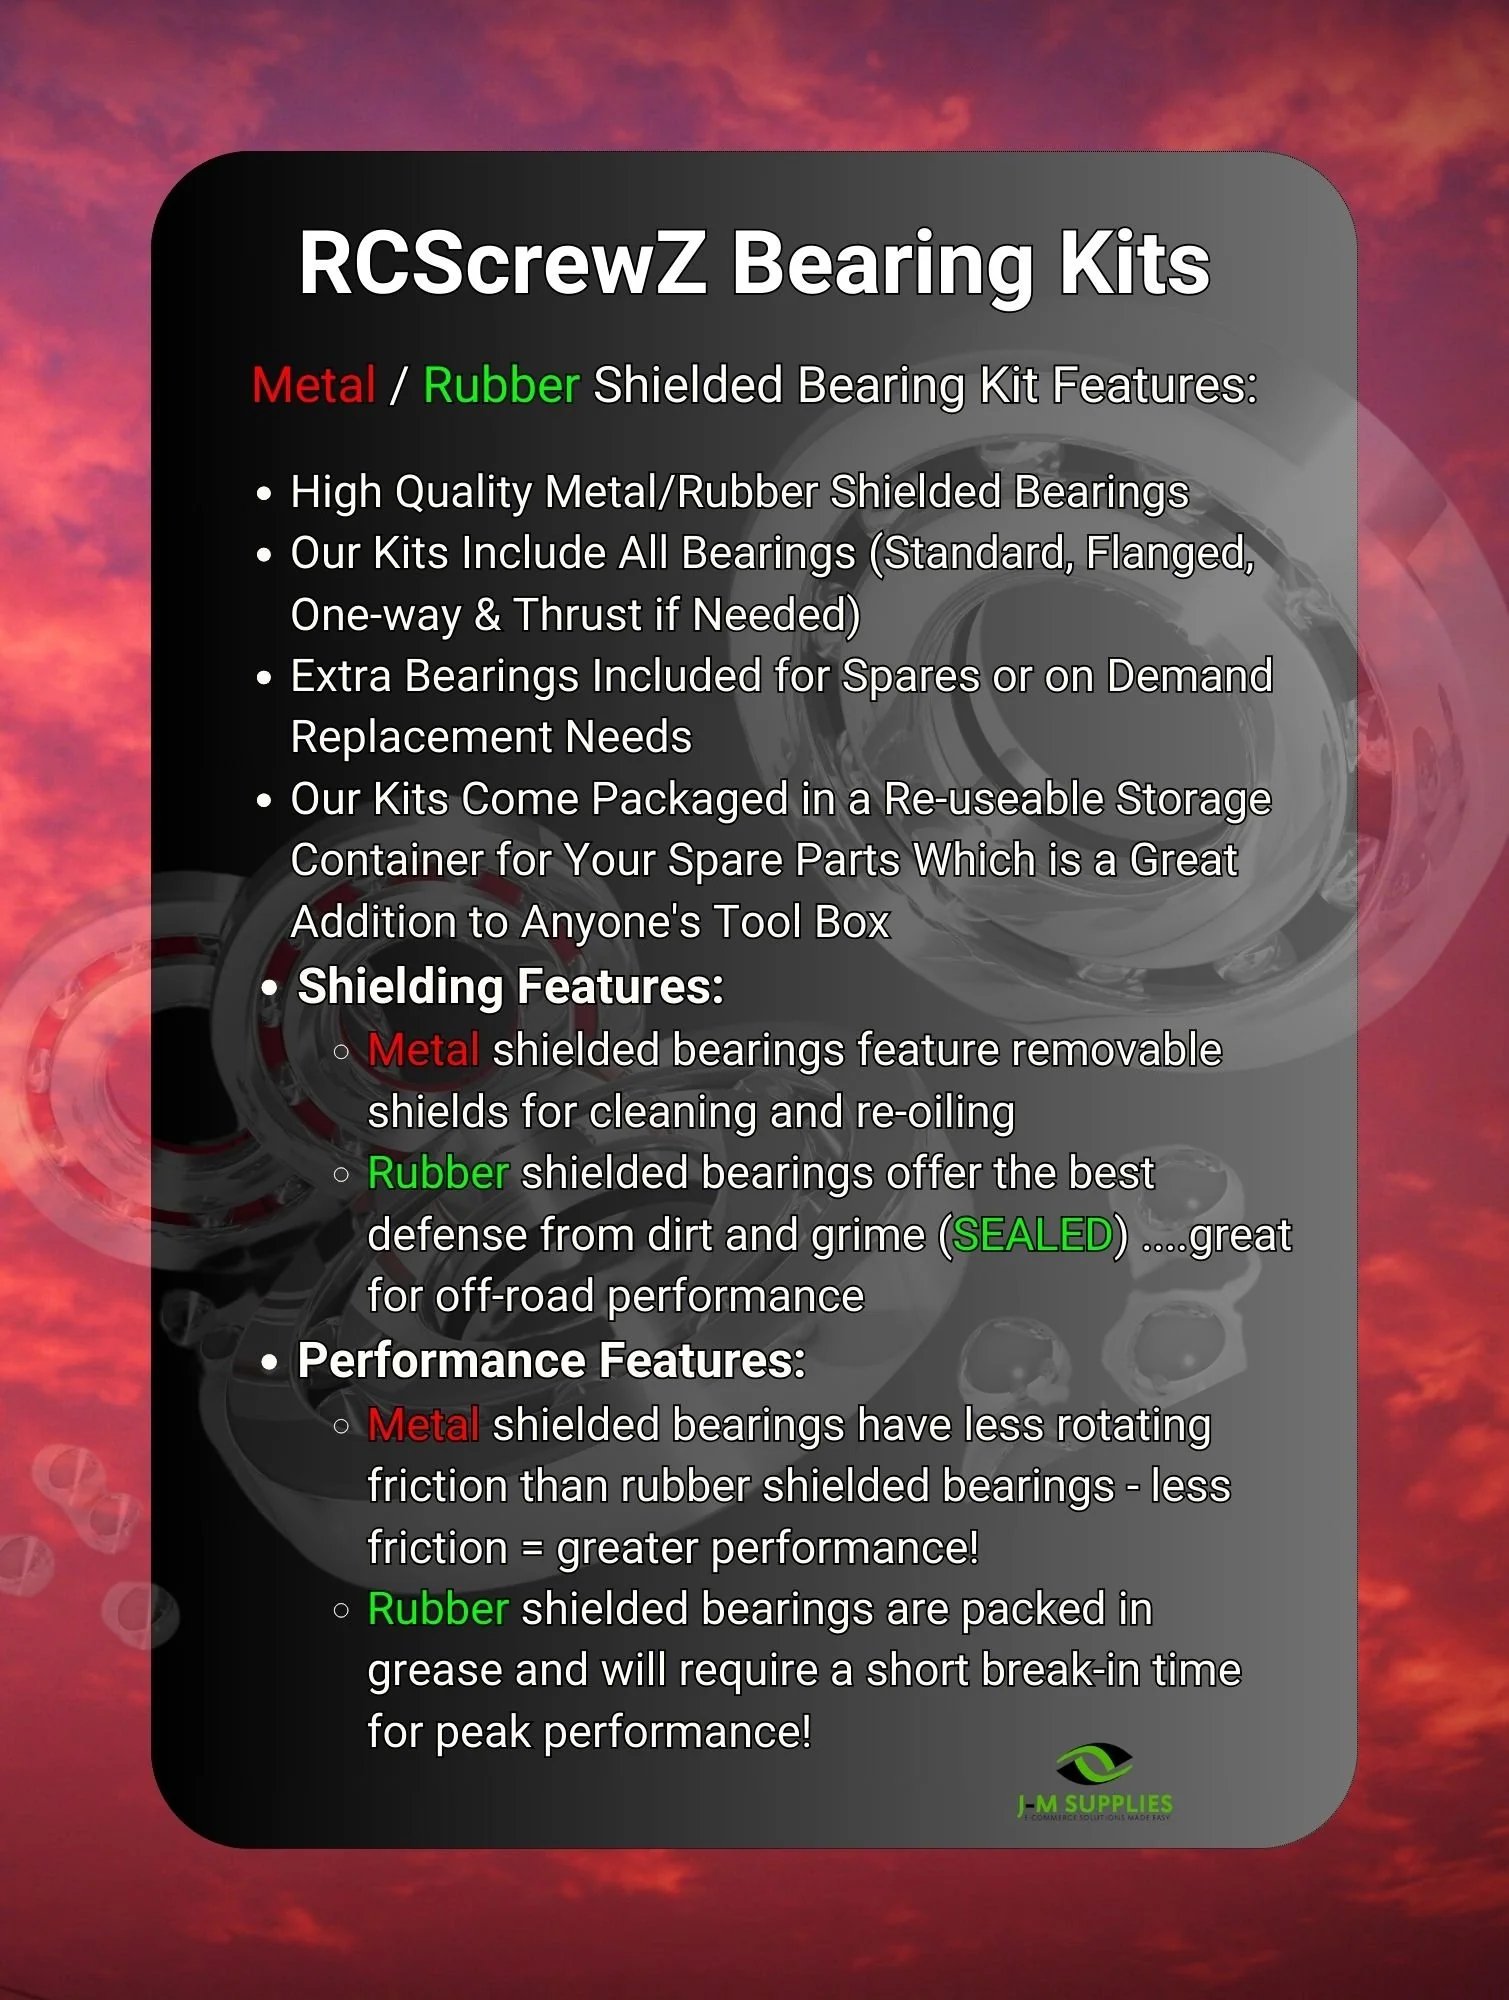 RCScrewZ Metal Shielded Bearing Kit swz011b for SWORKz Fox 4x4 1/10th #940001 - Picture 10 of 12